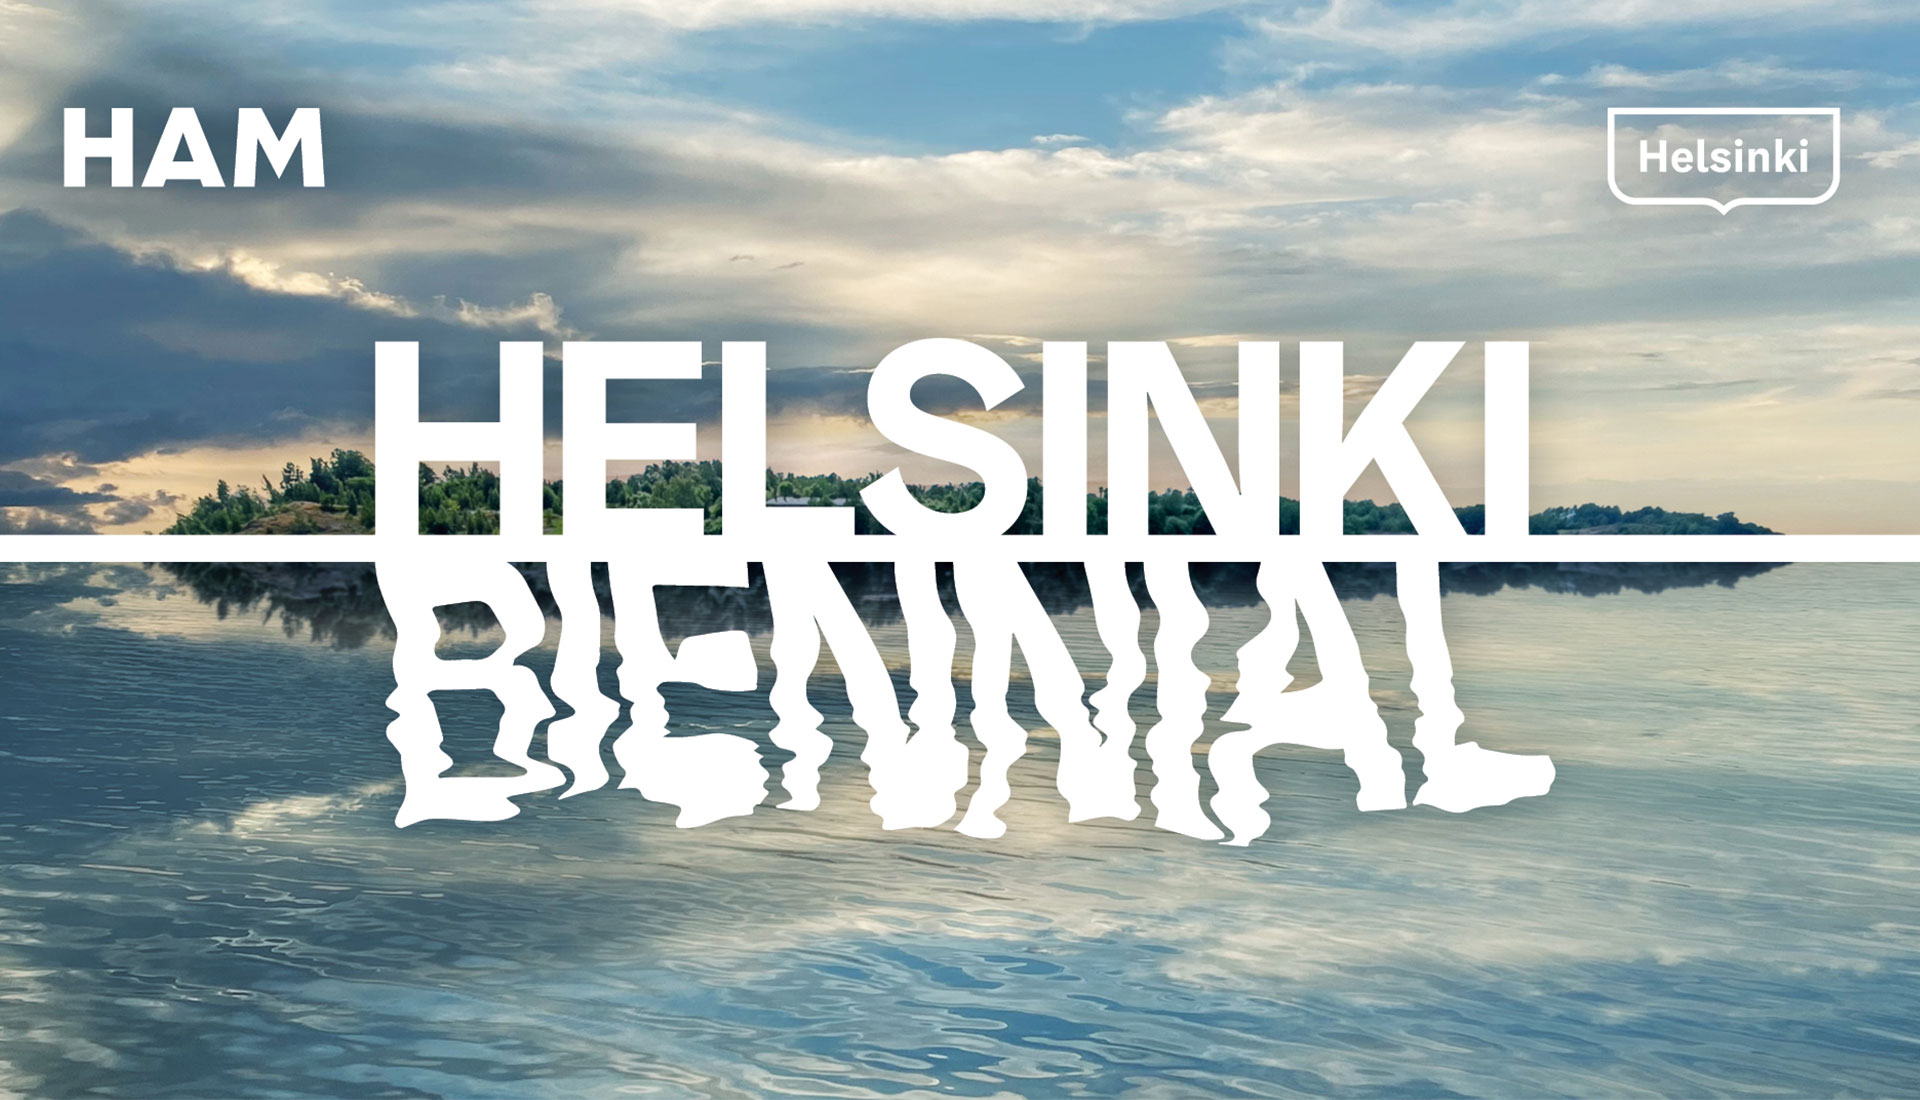 Helsinki Biennial 2023: экология и цифровые технологии